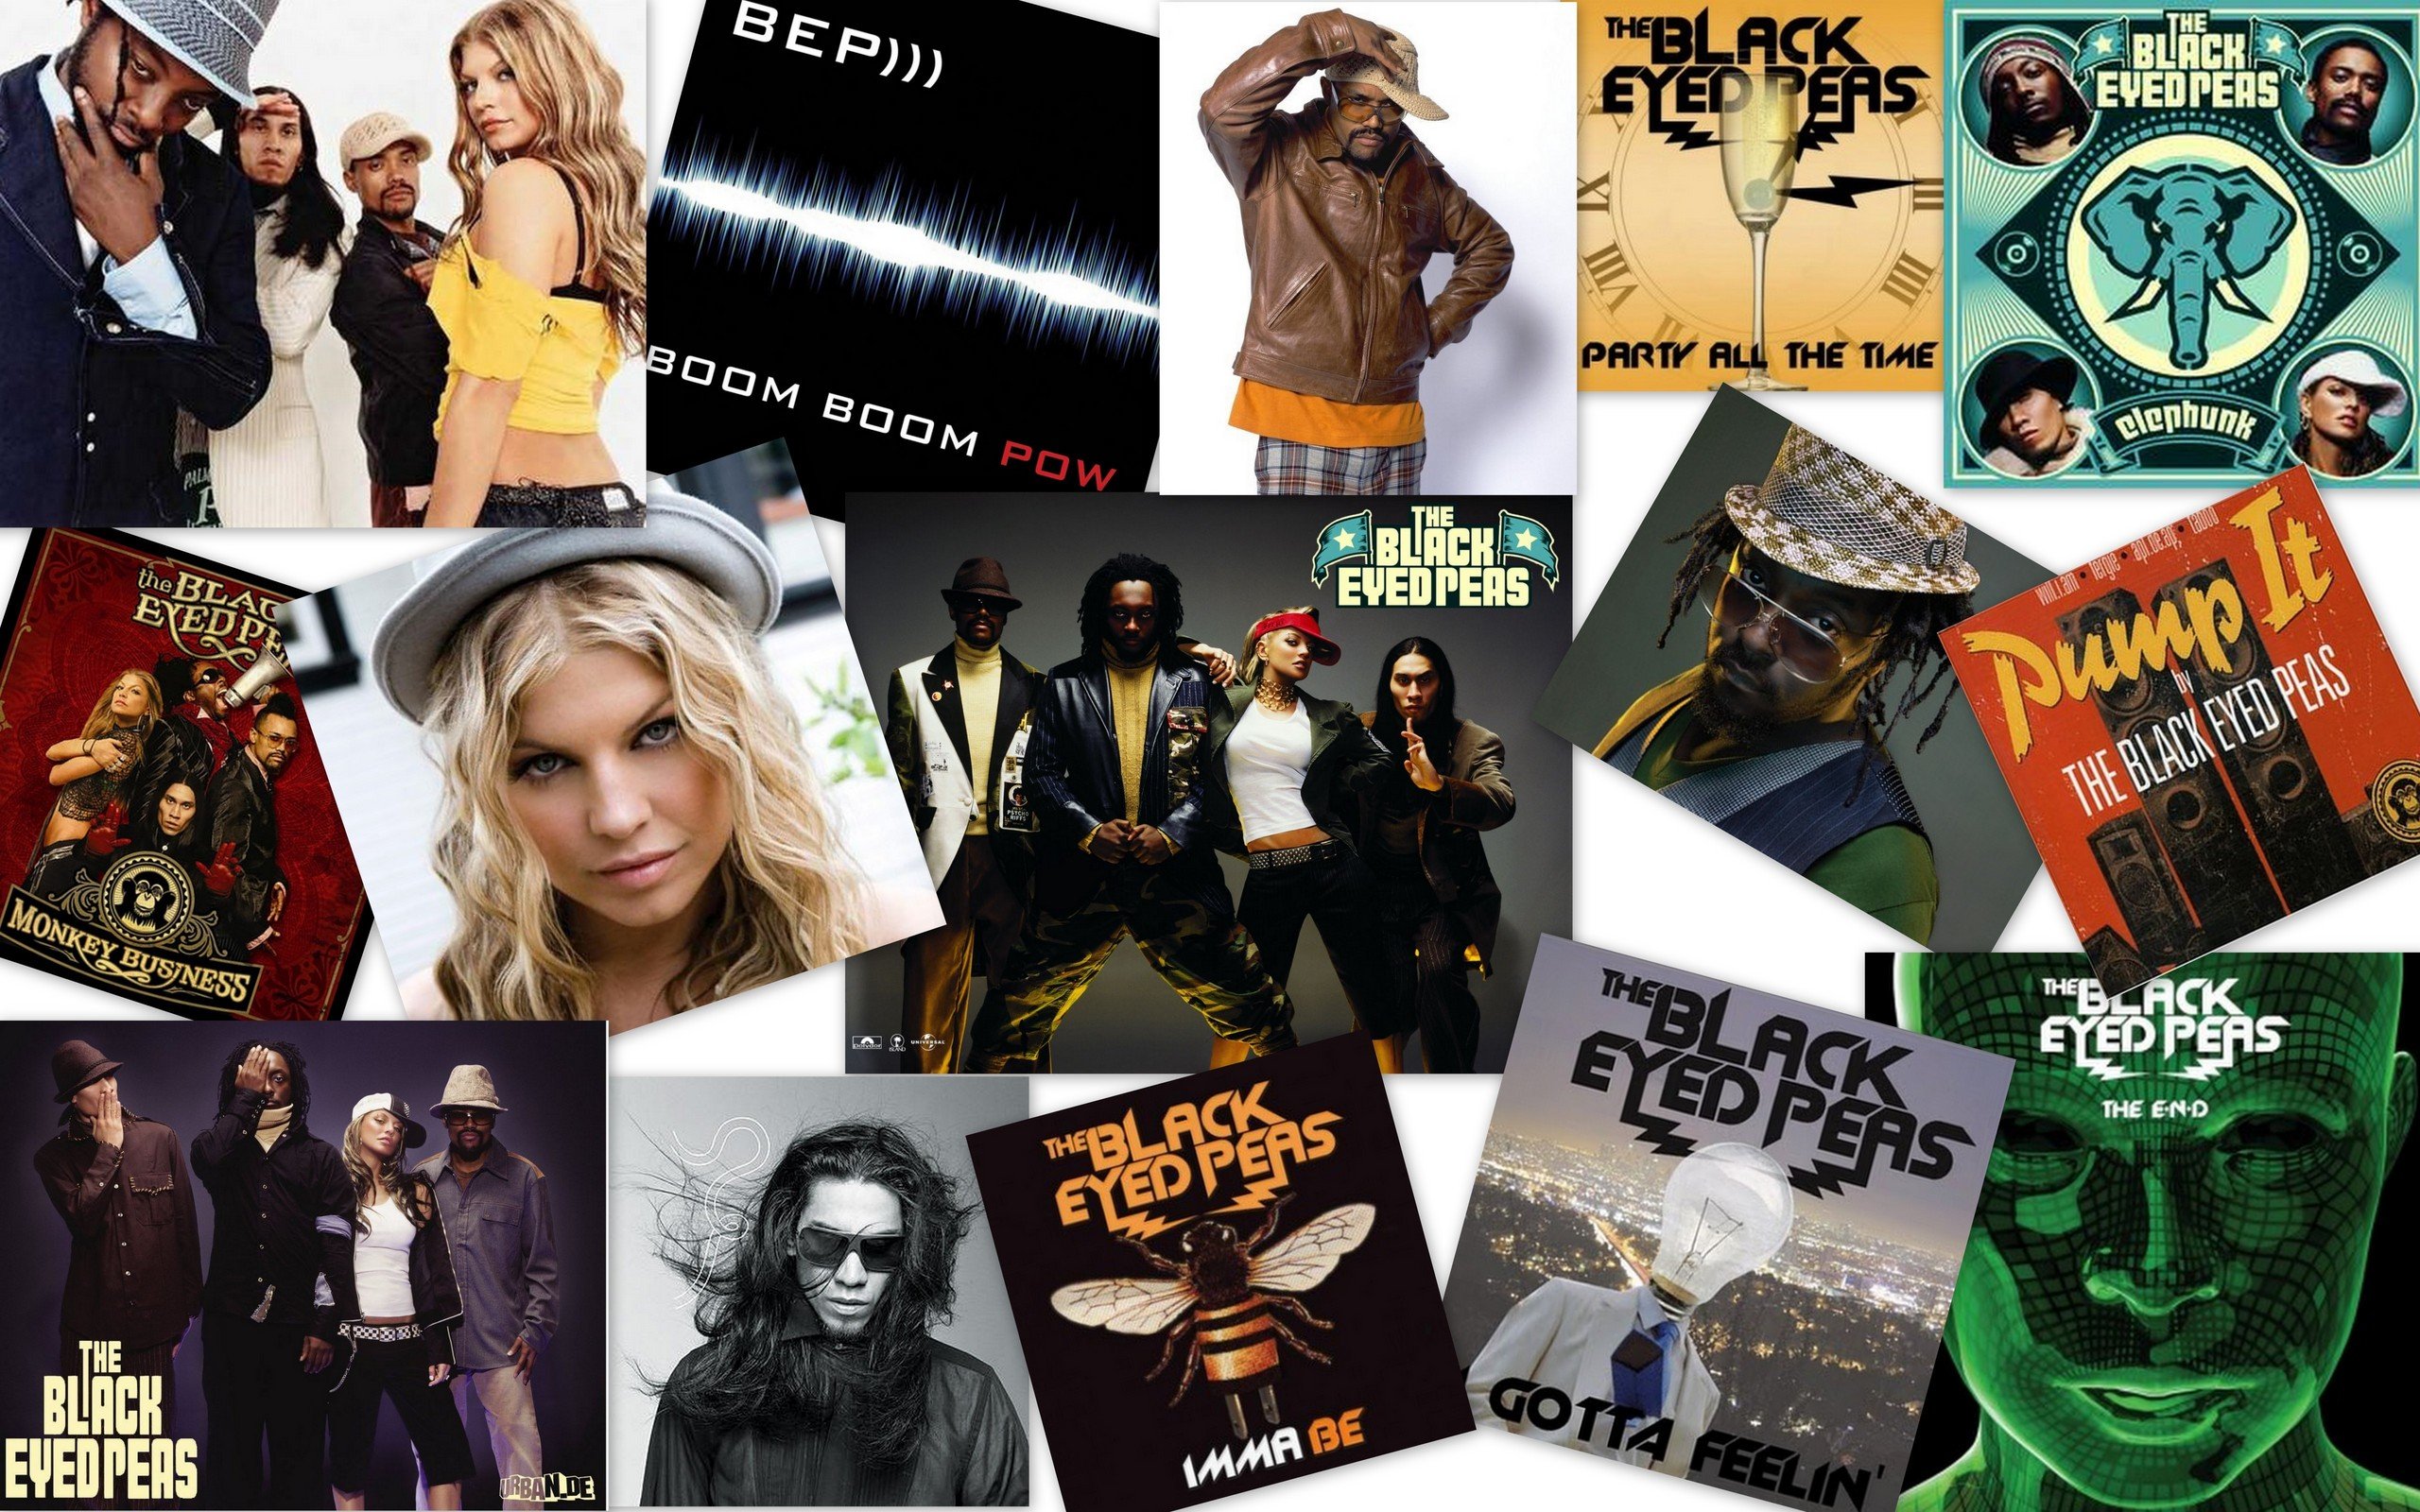 black, Eyed, Peas, Hip, Hop, R b, Edm, Electro, House, Fergie Wallpaper